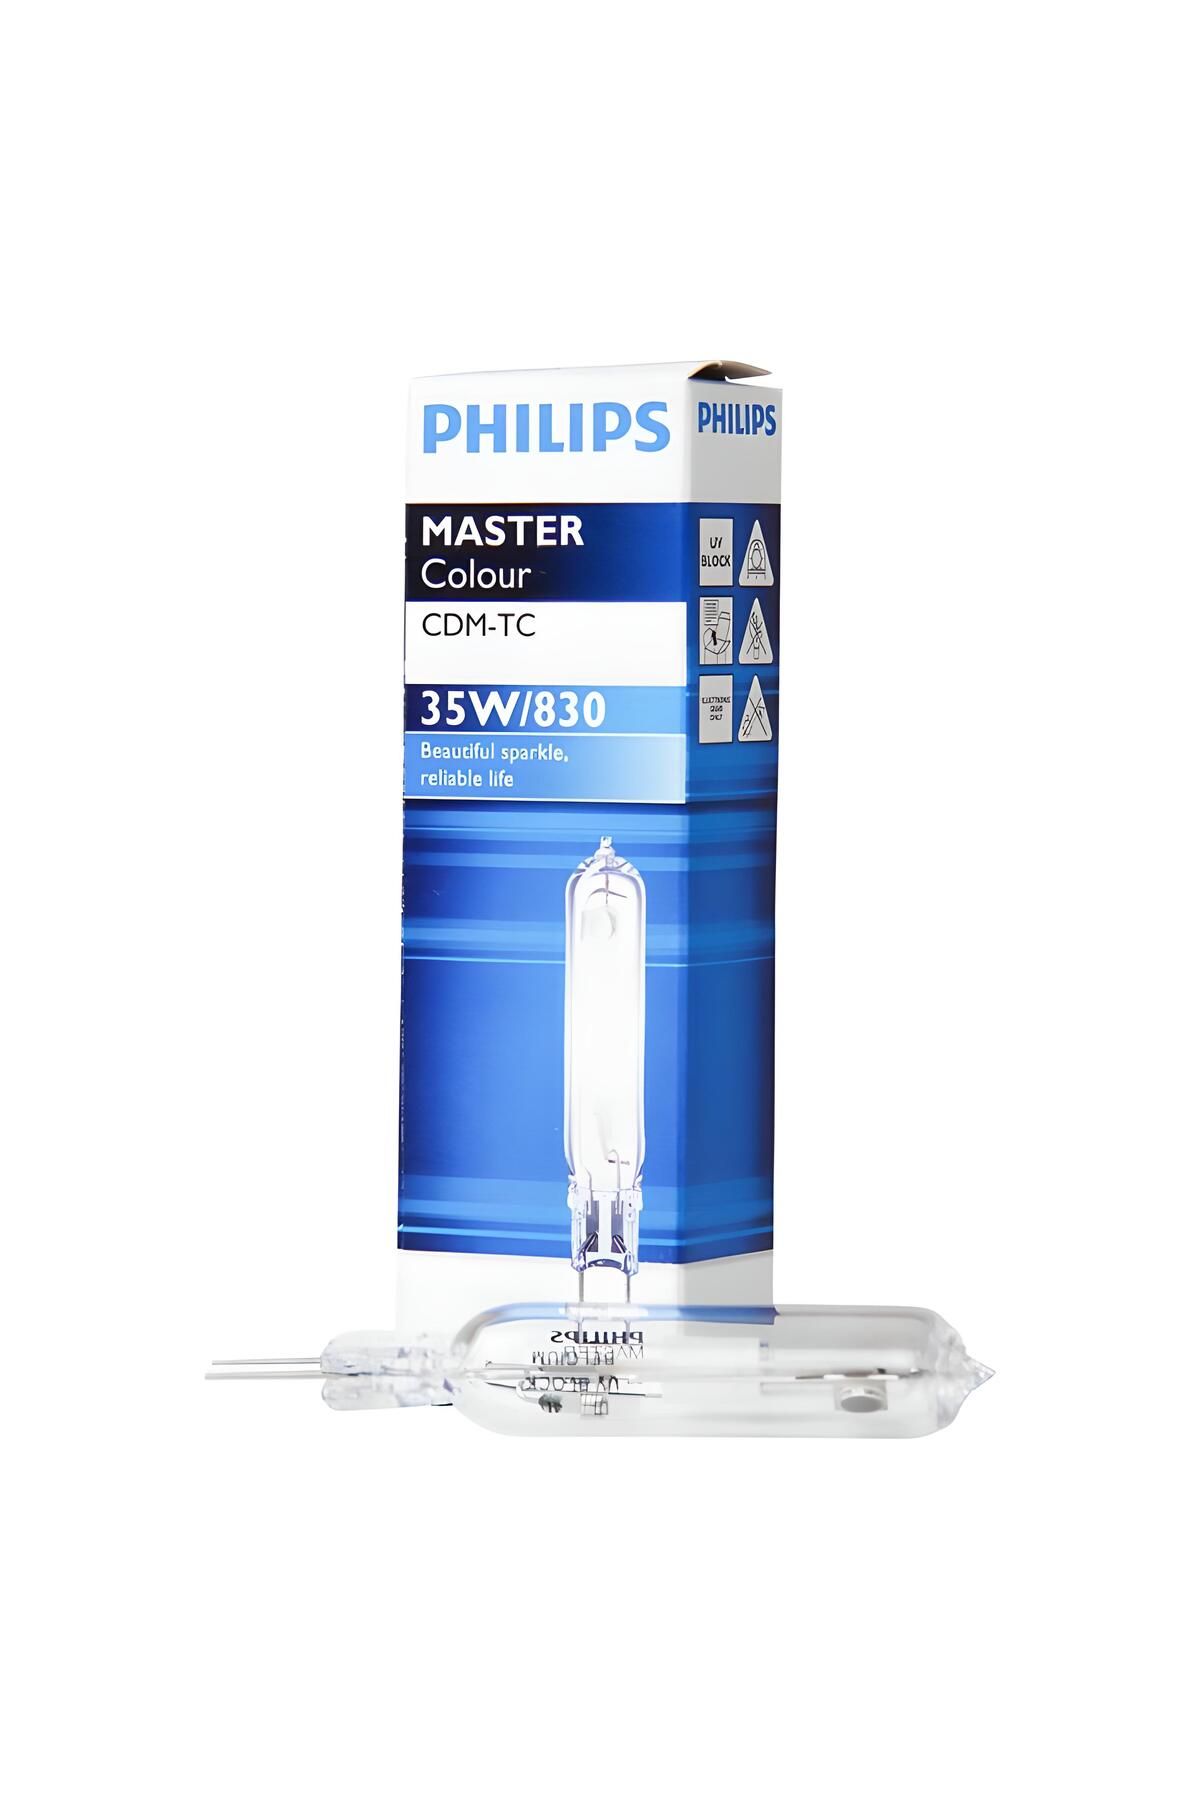 Philips MASTER Colour CDM-TC G8.5 CDM-TC 35W - 830 Warm White beautiful sparkle, reliable life